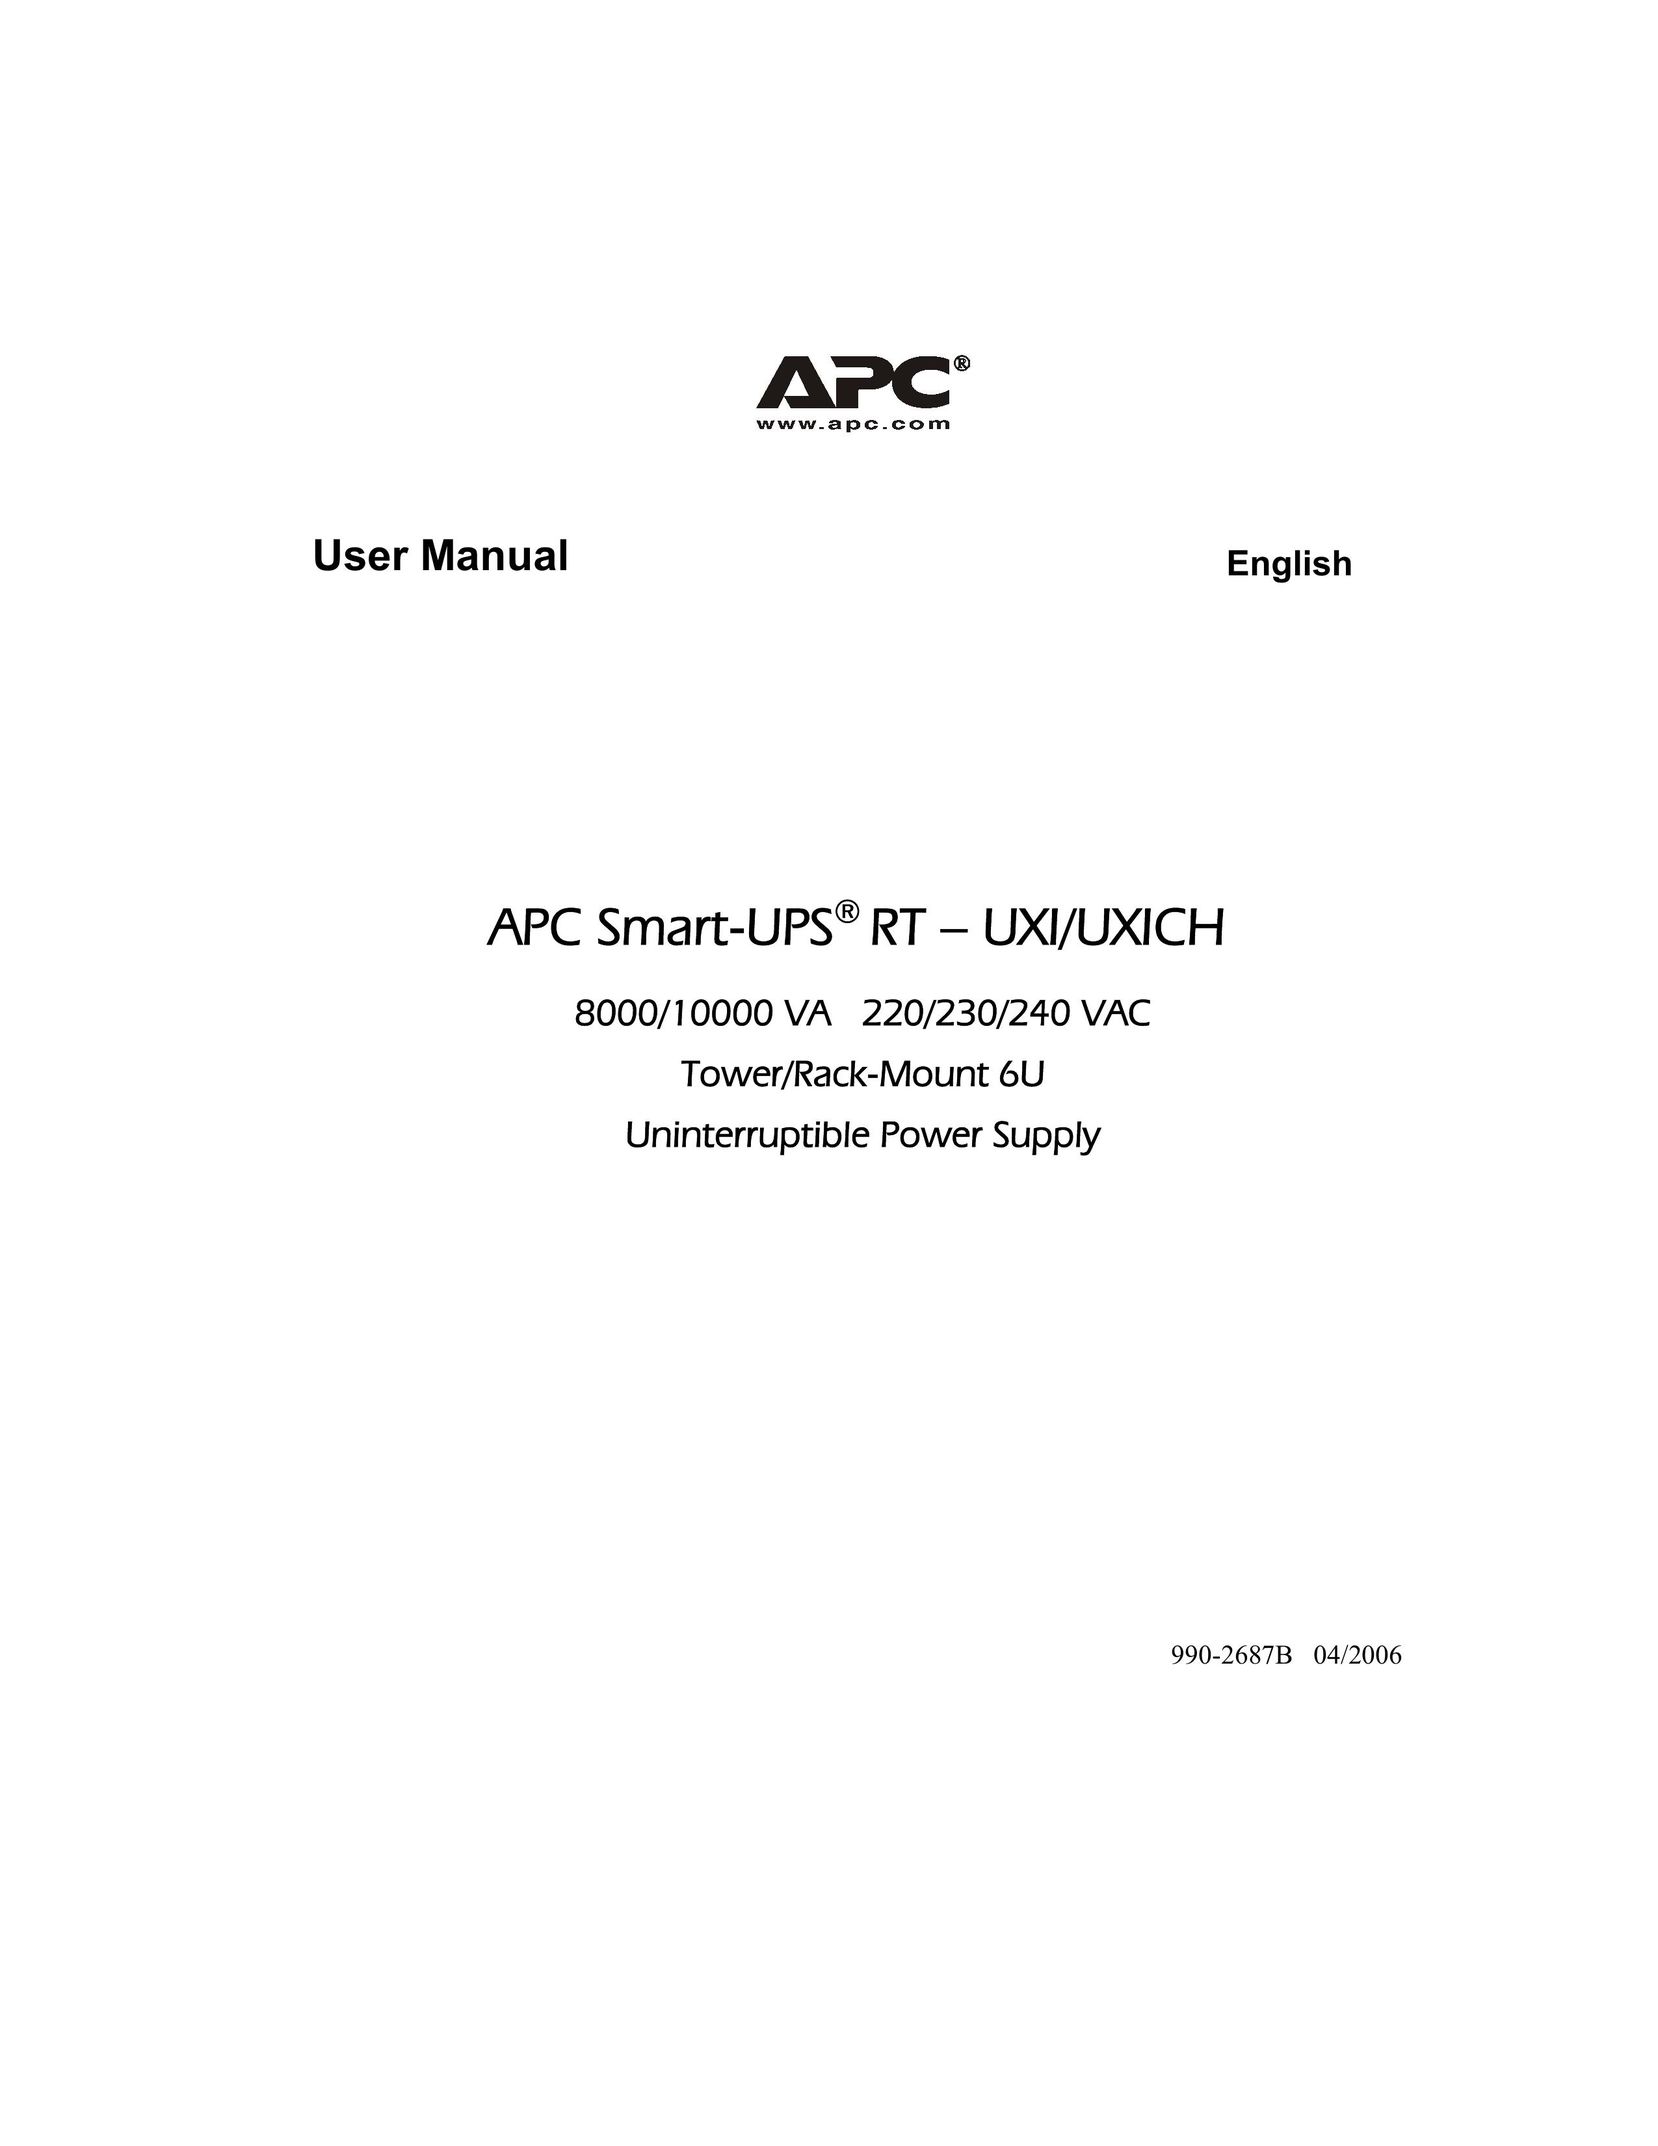 American Power Conversion 220 VAC Power Supply User Manual